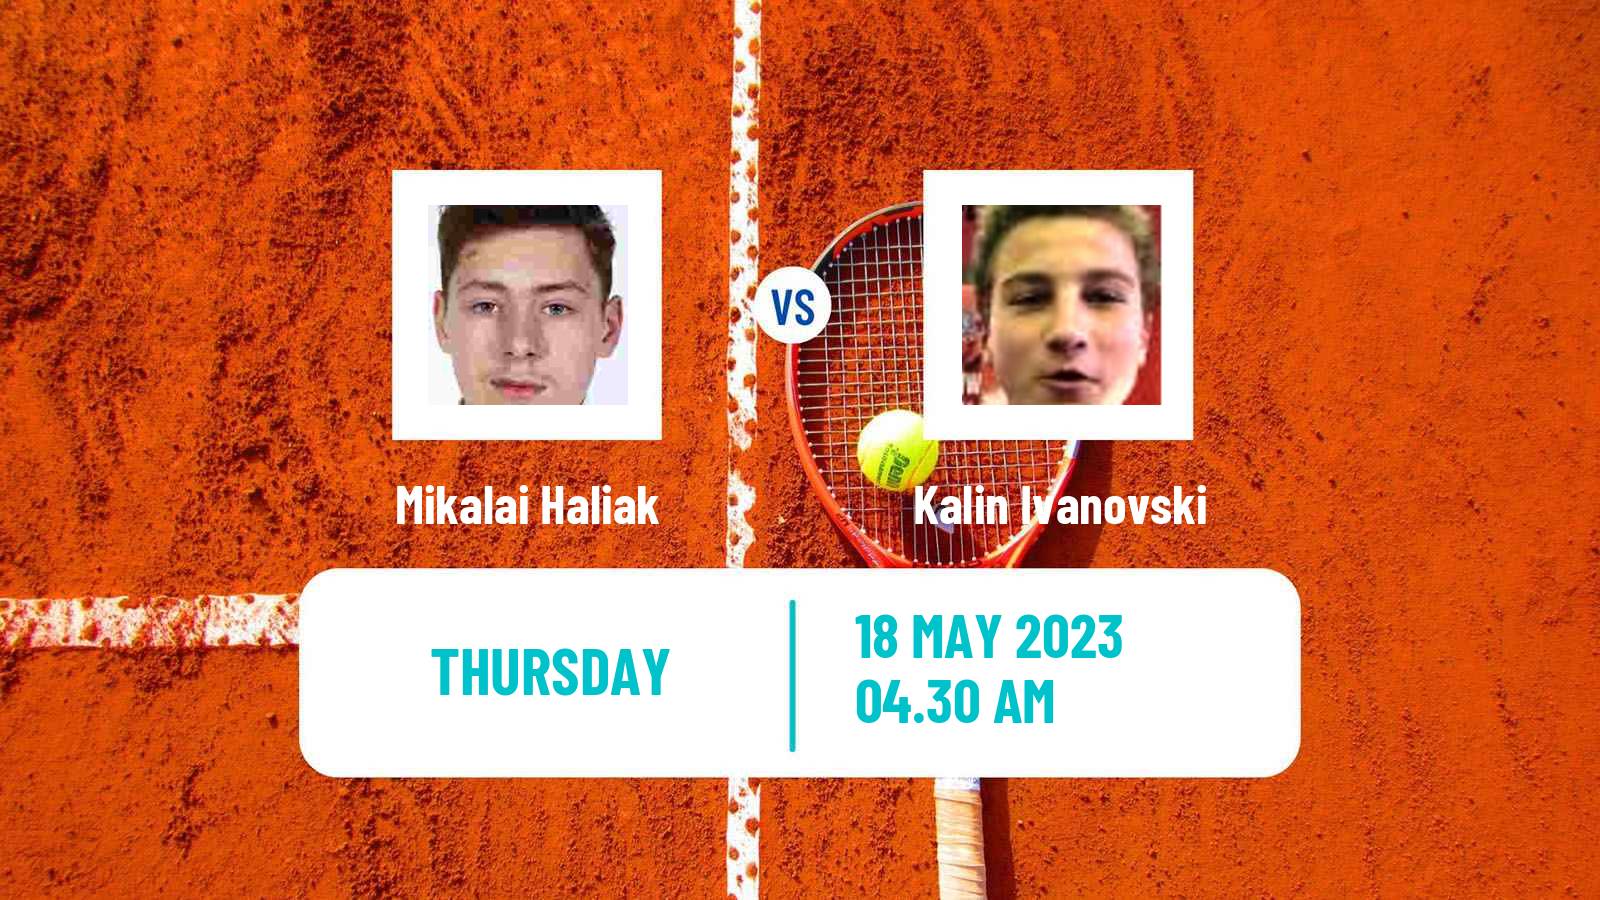 Tennis ITF M25 Kursumlijska Banja 2 Men Mikalai Haliak - Kalin Ivanovski